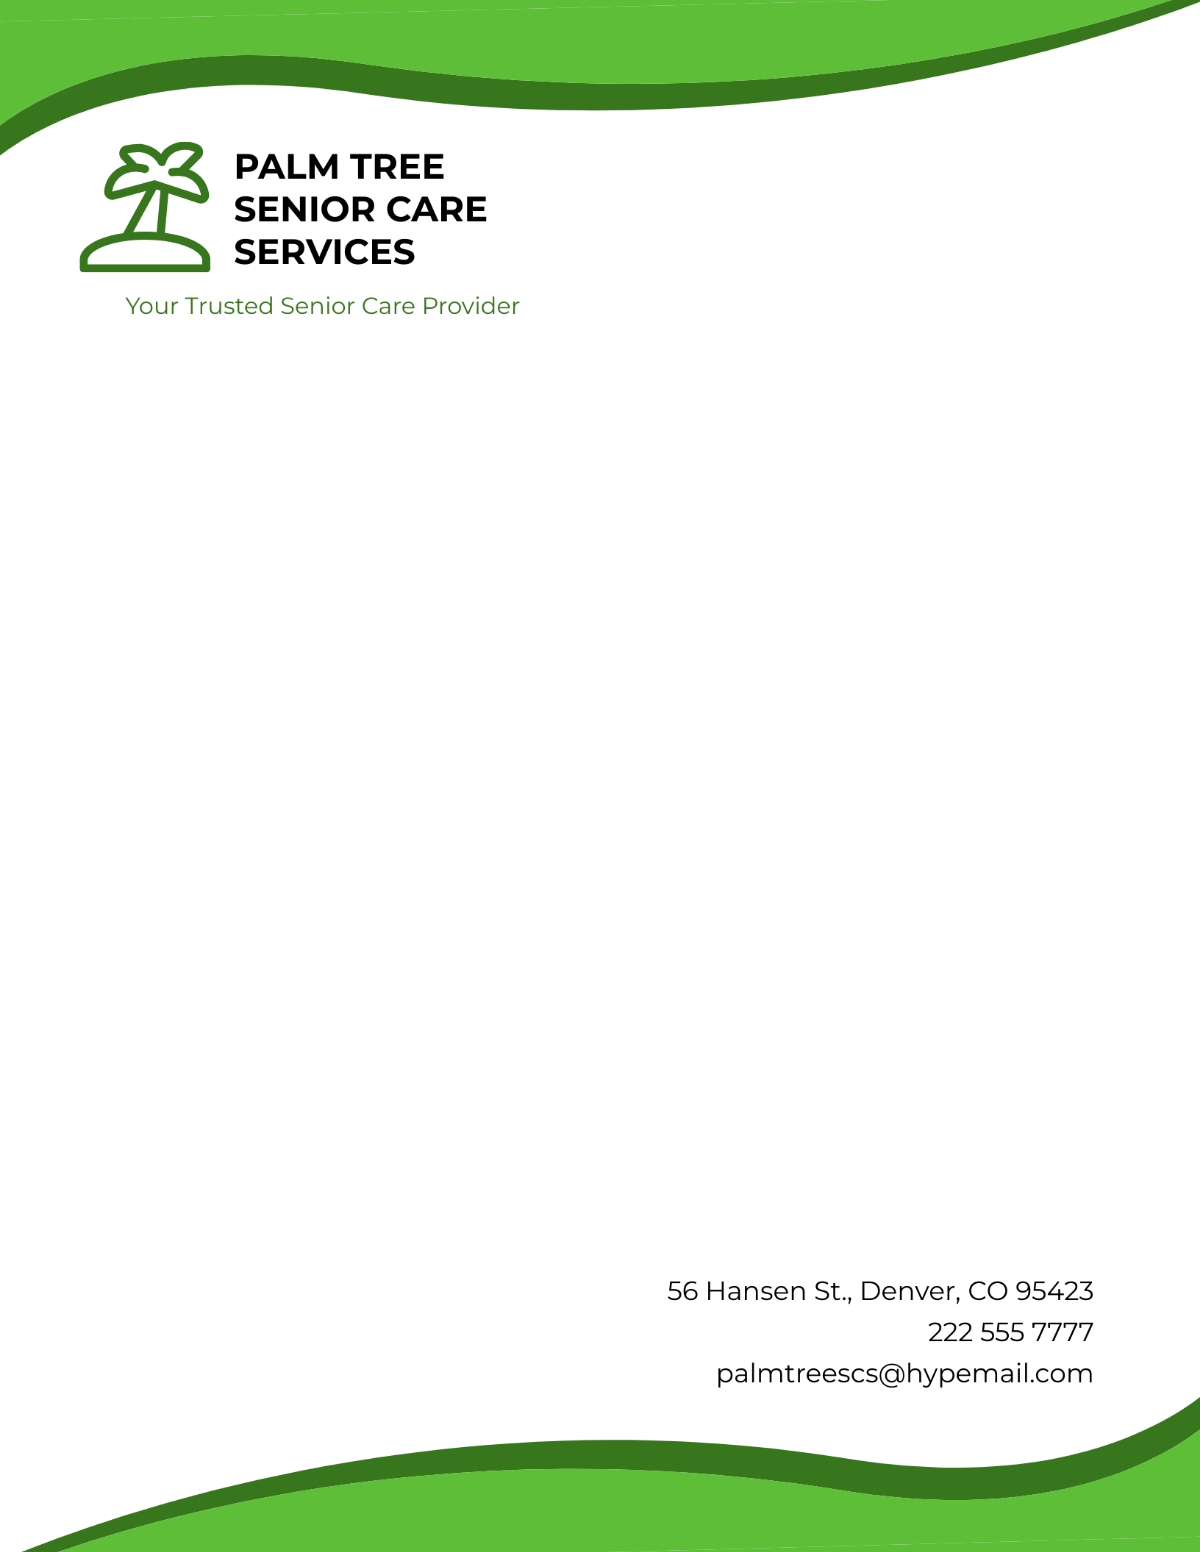 Senior Care Services Letterhead Template